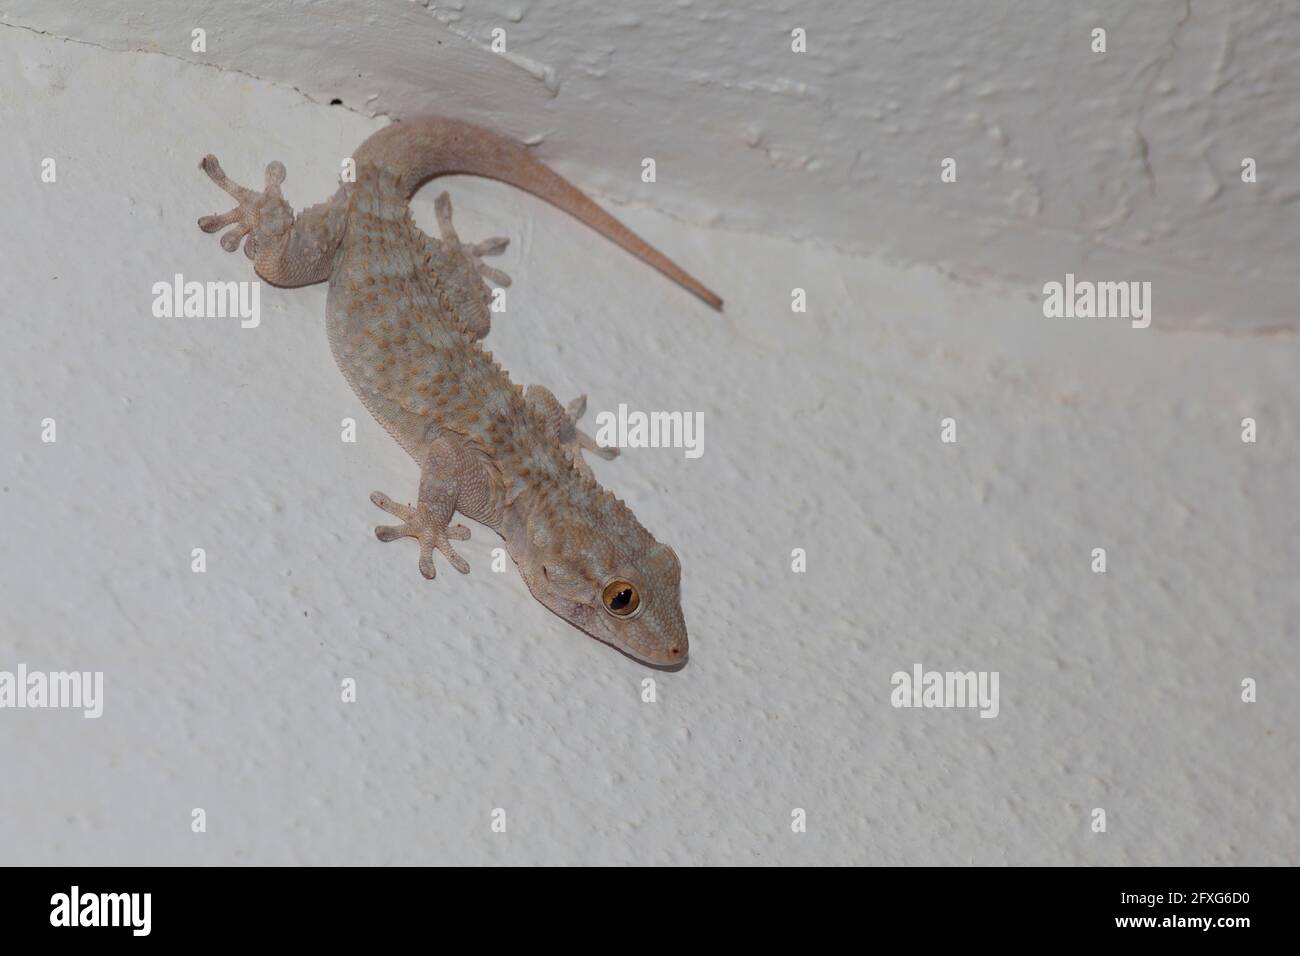 Salamandra aferrada a una pared blanca esperando a cazar a algunos presa Foto de stock